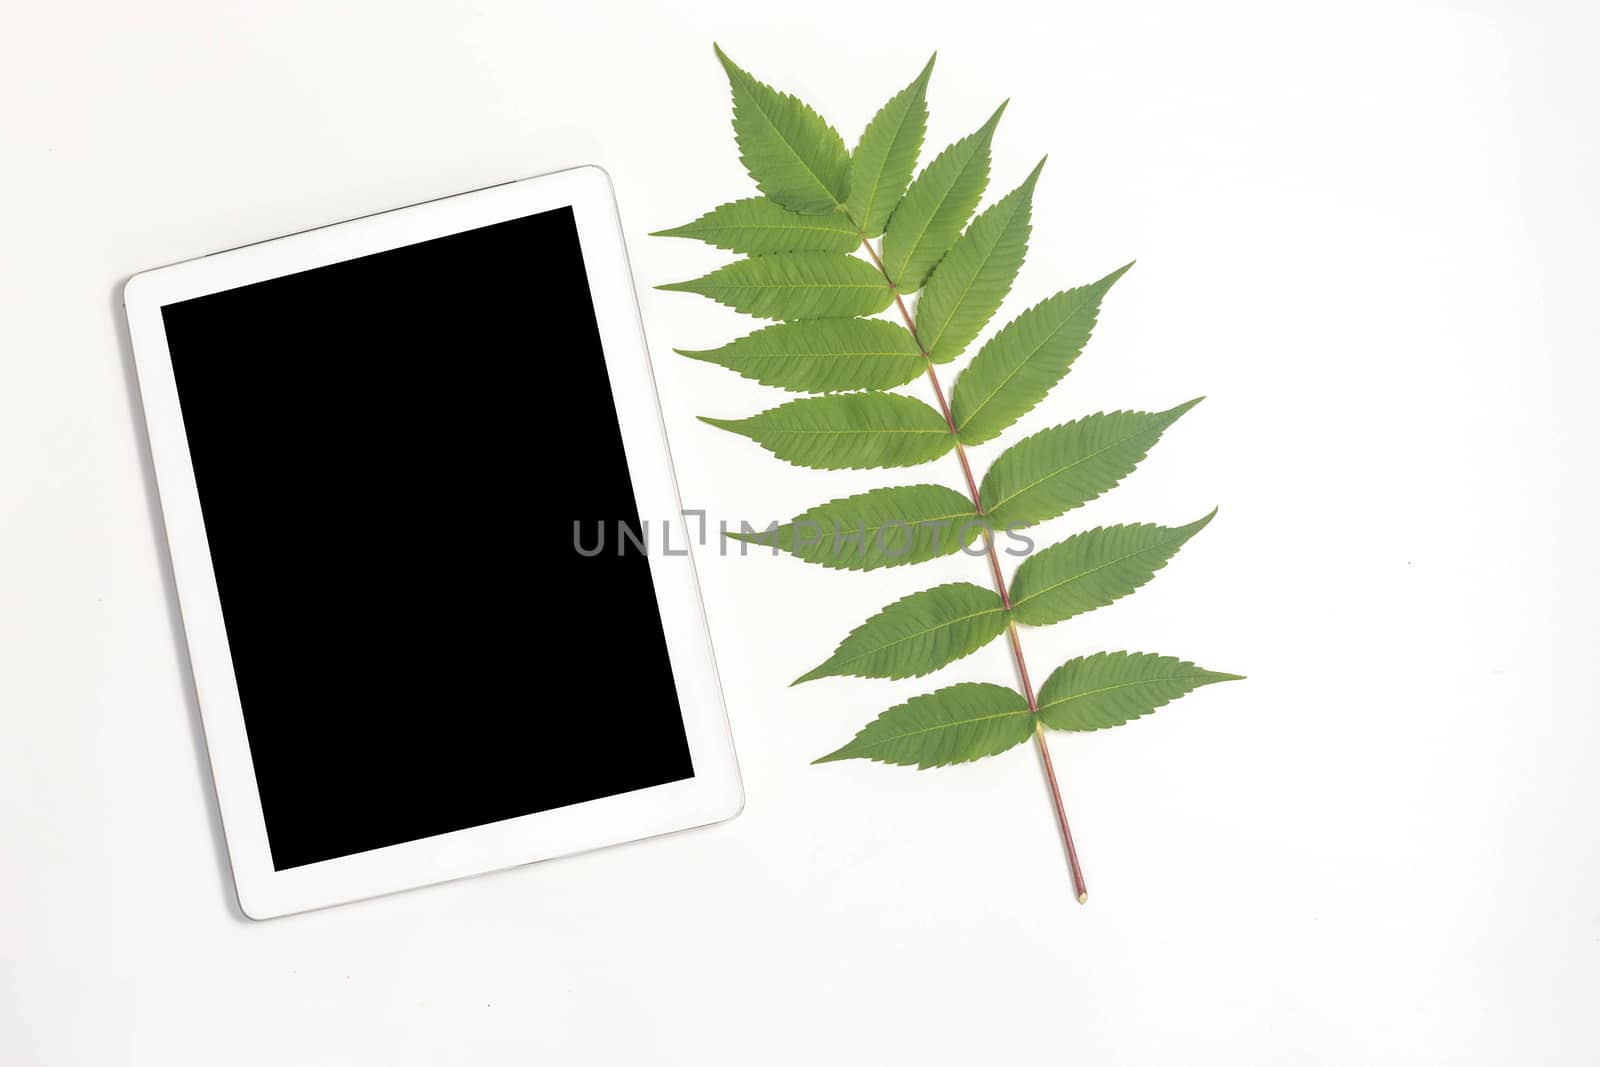 White tablet and white whalnut leaf on gray background. by galinasharapova